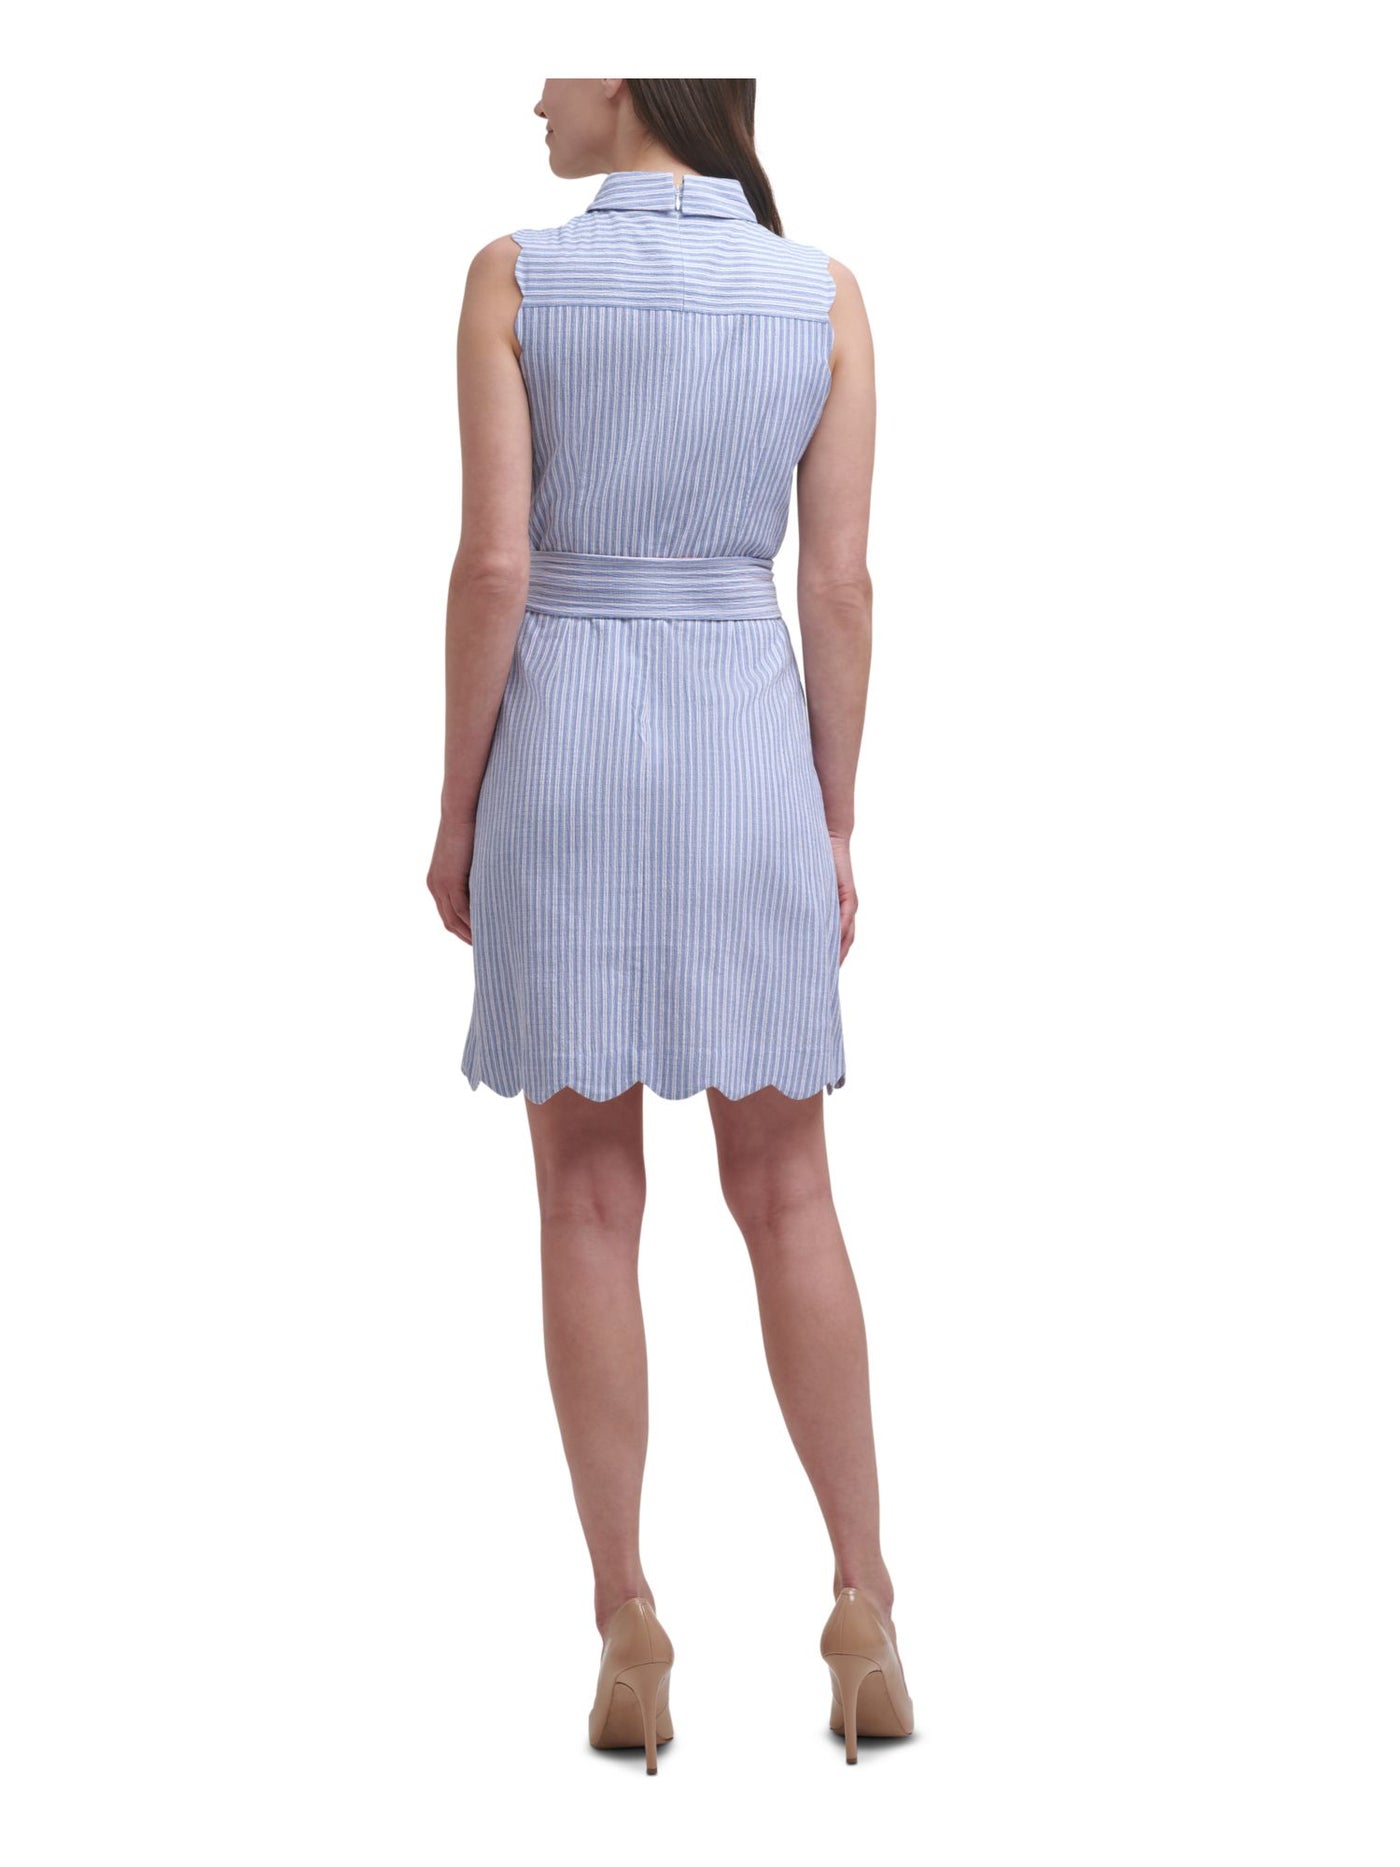 HARPER ROSE Womens Stretch Belted Scalloped Partial Button Closure Sleeveless Point Collar Short Wear To Work Shirt Dress